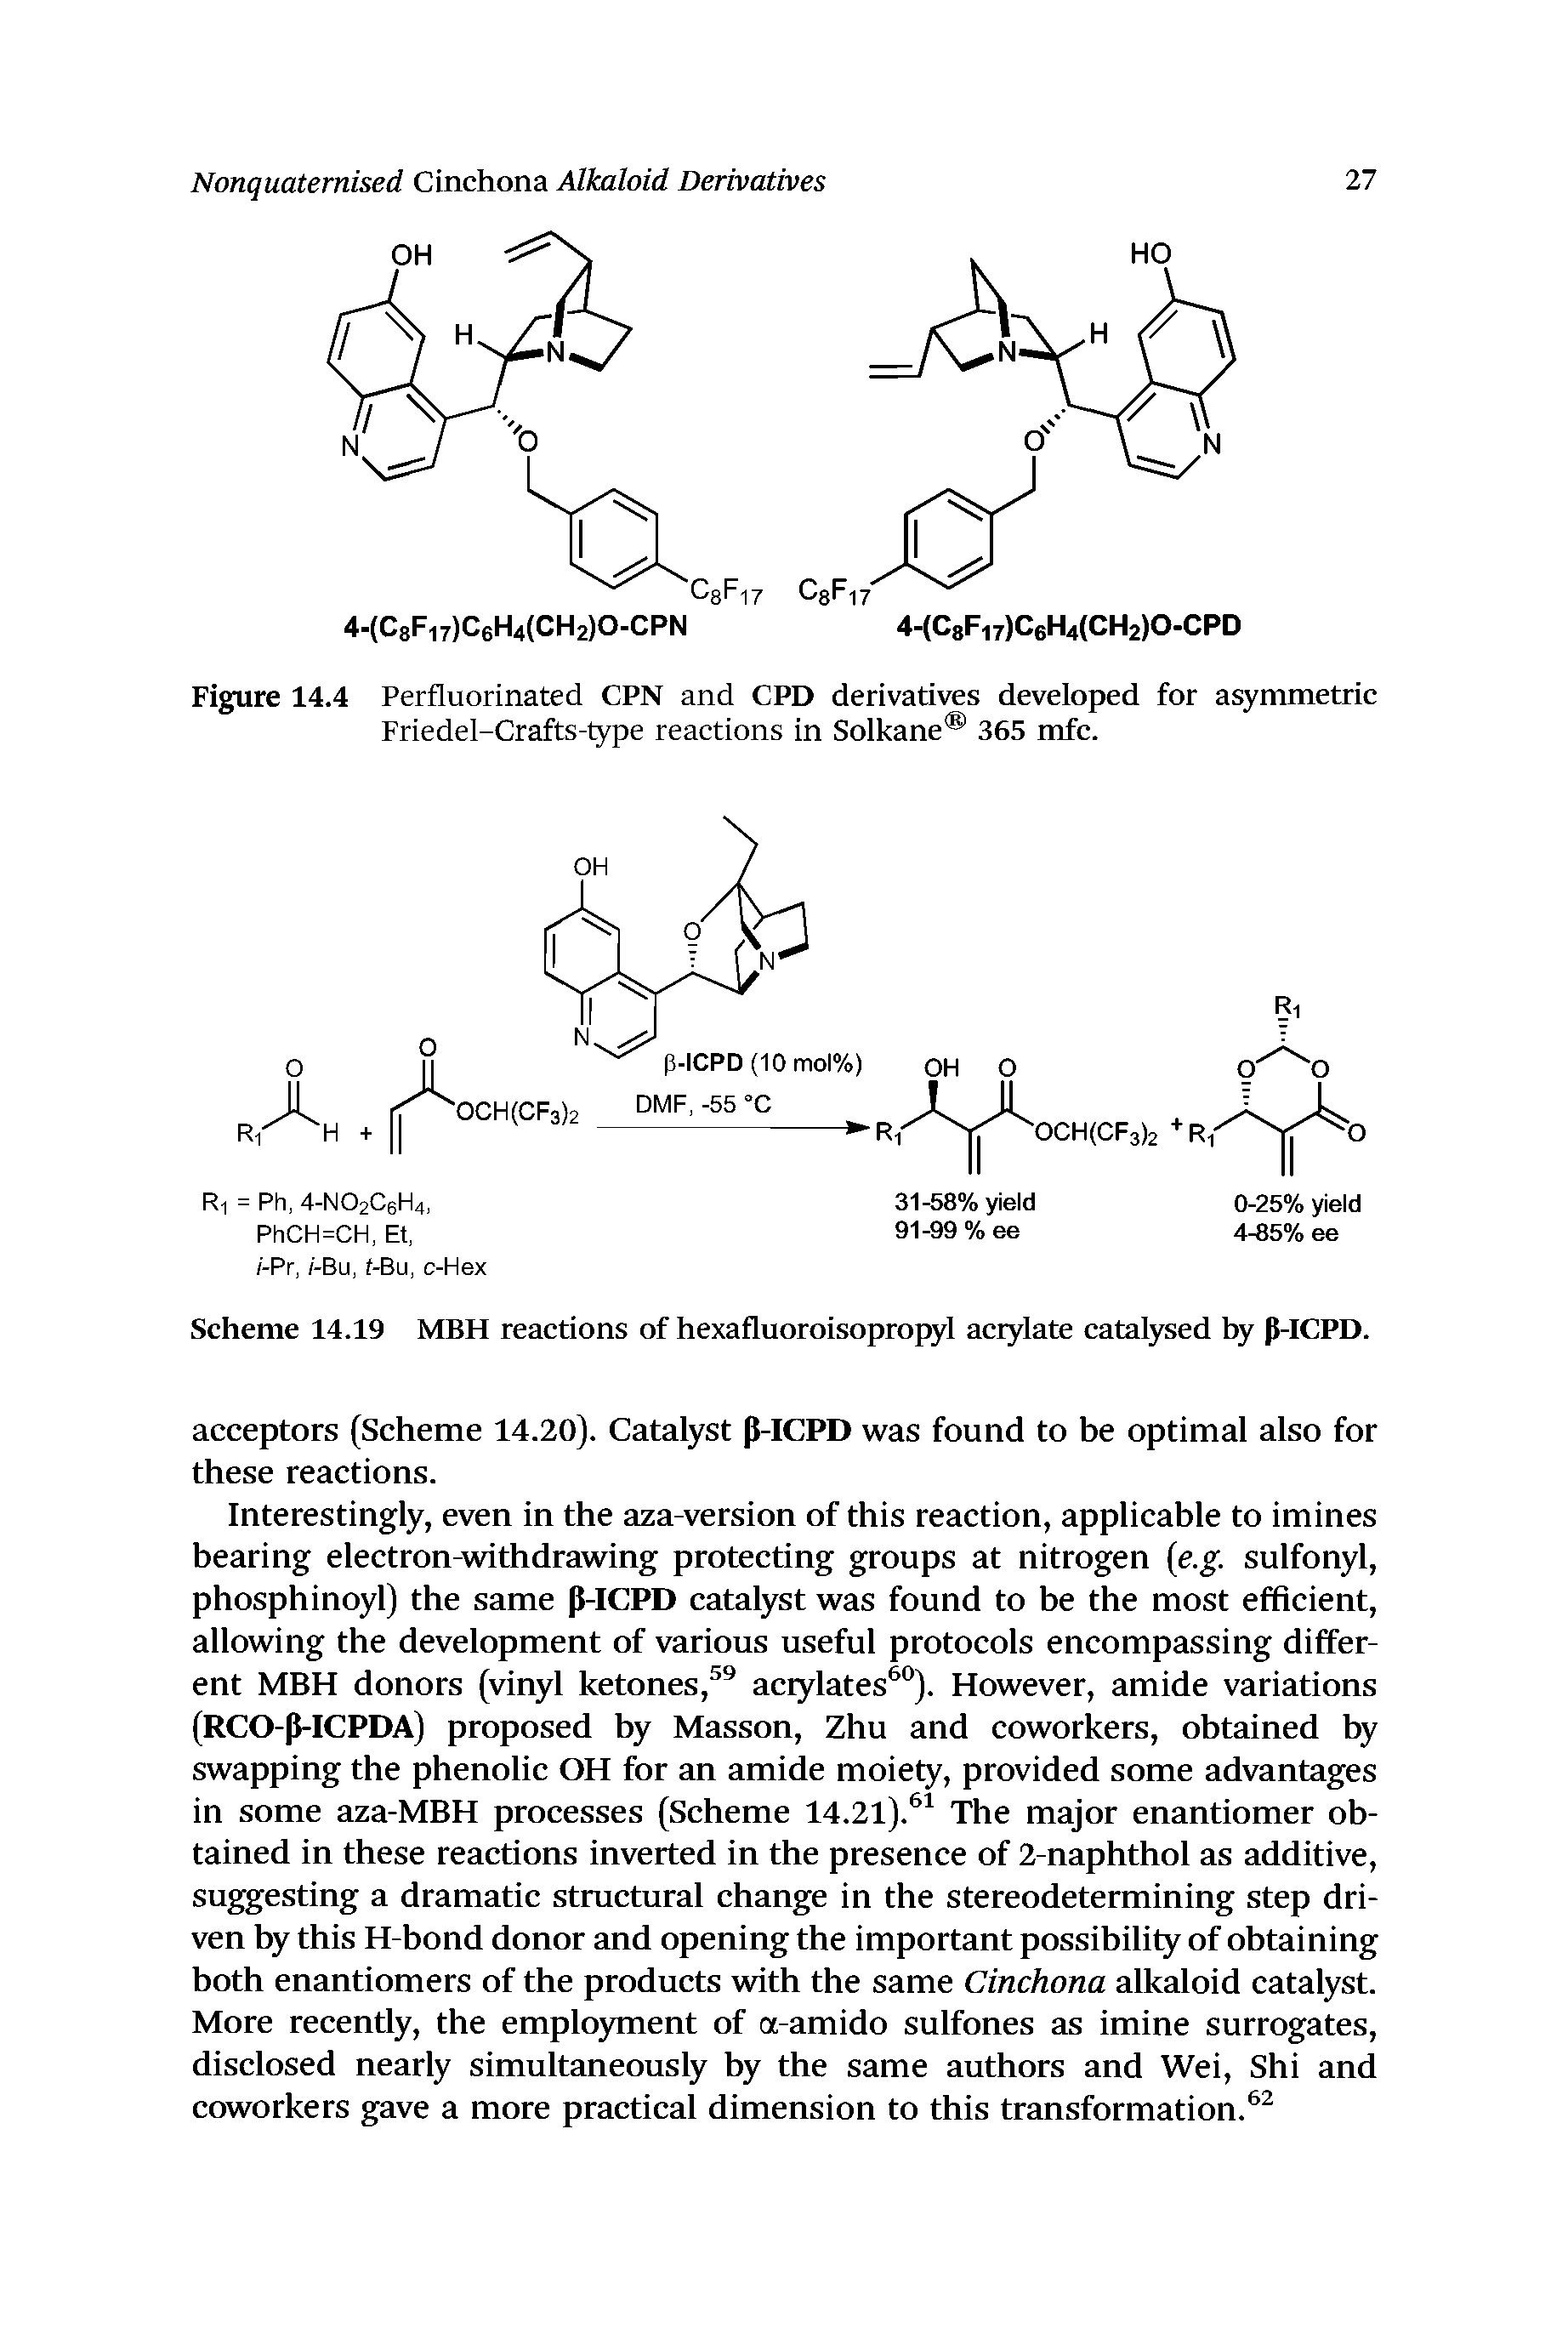 Scheme 14.19 MBH reactions of hexafluoroisopropyl acrylate catalysed by 5-ICPD.